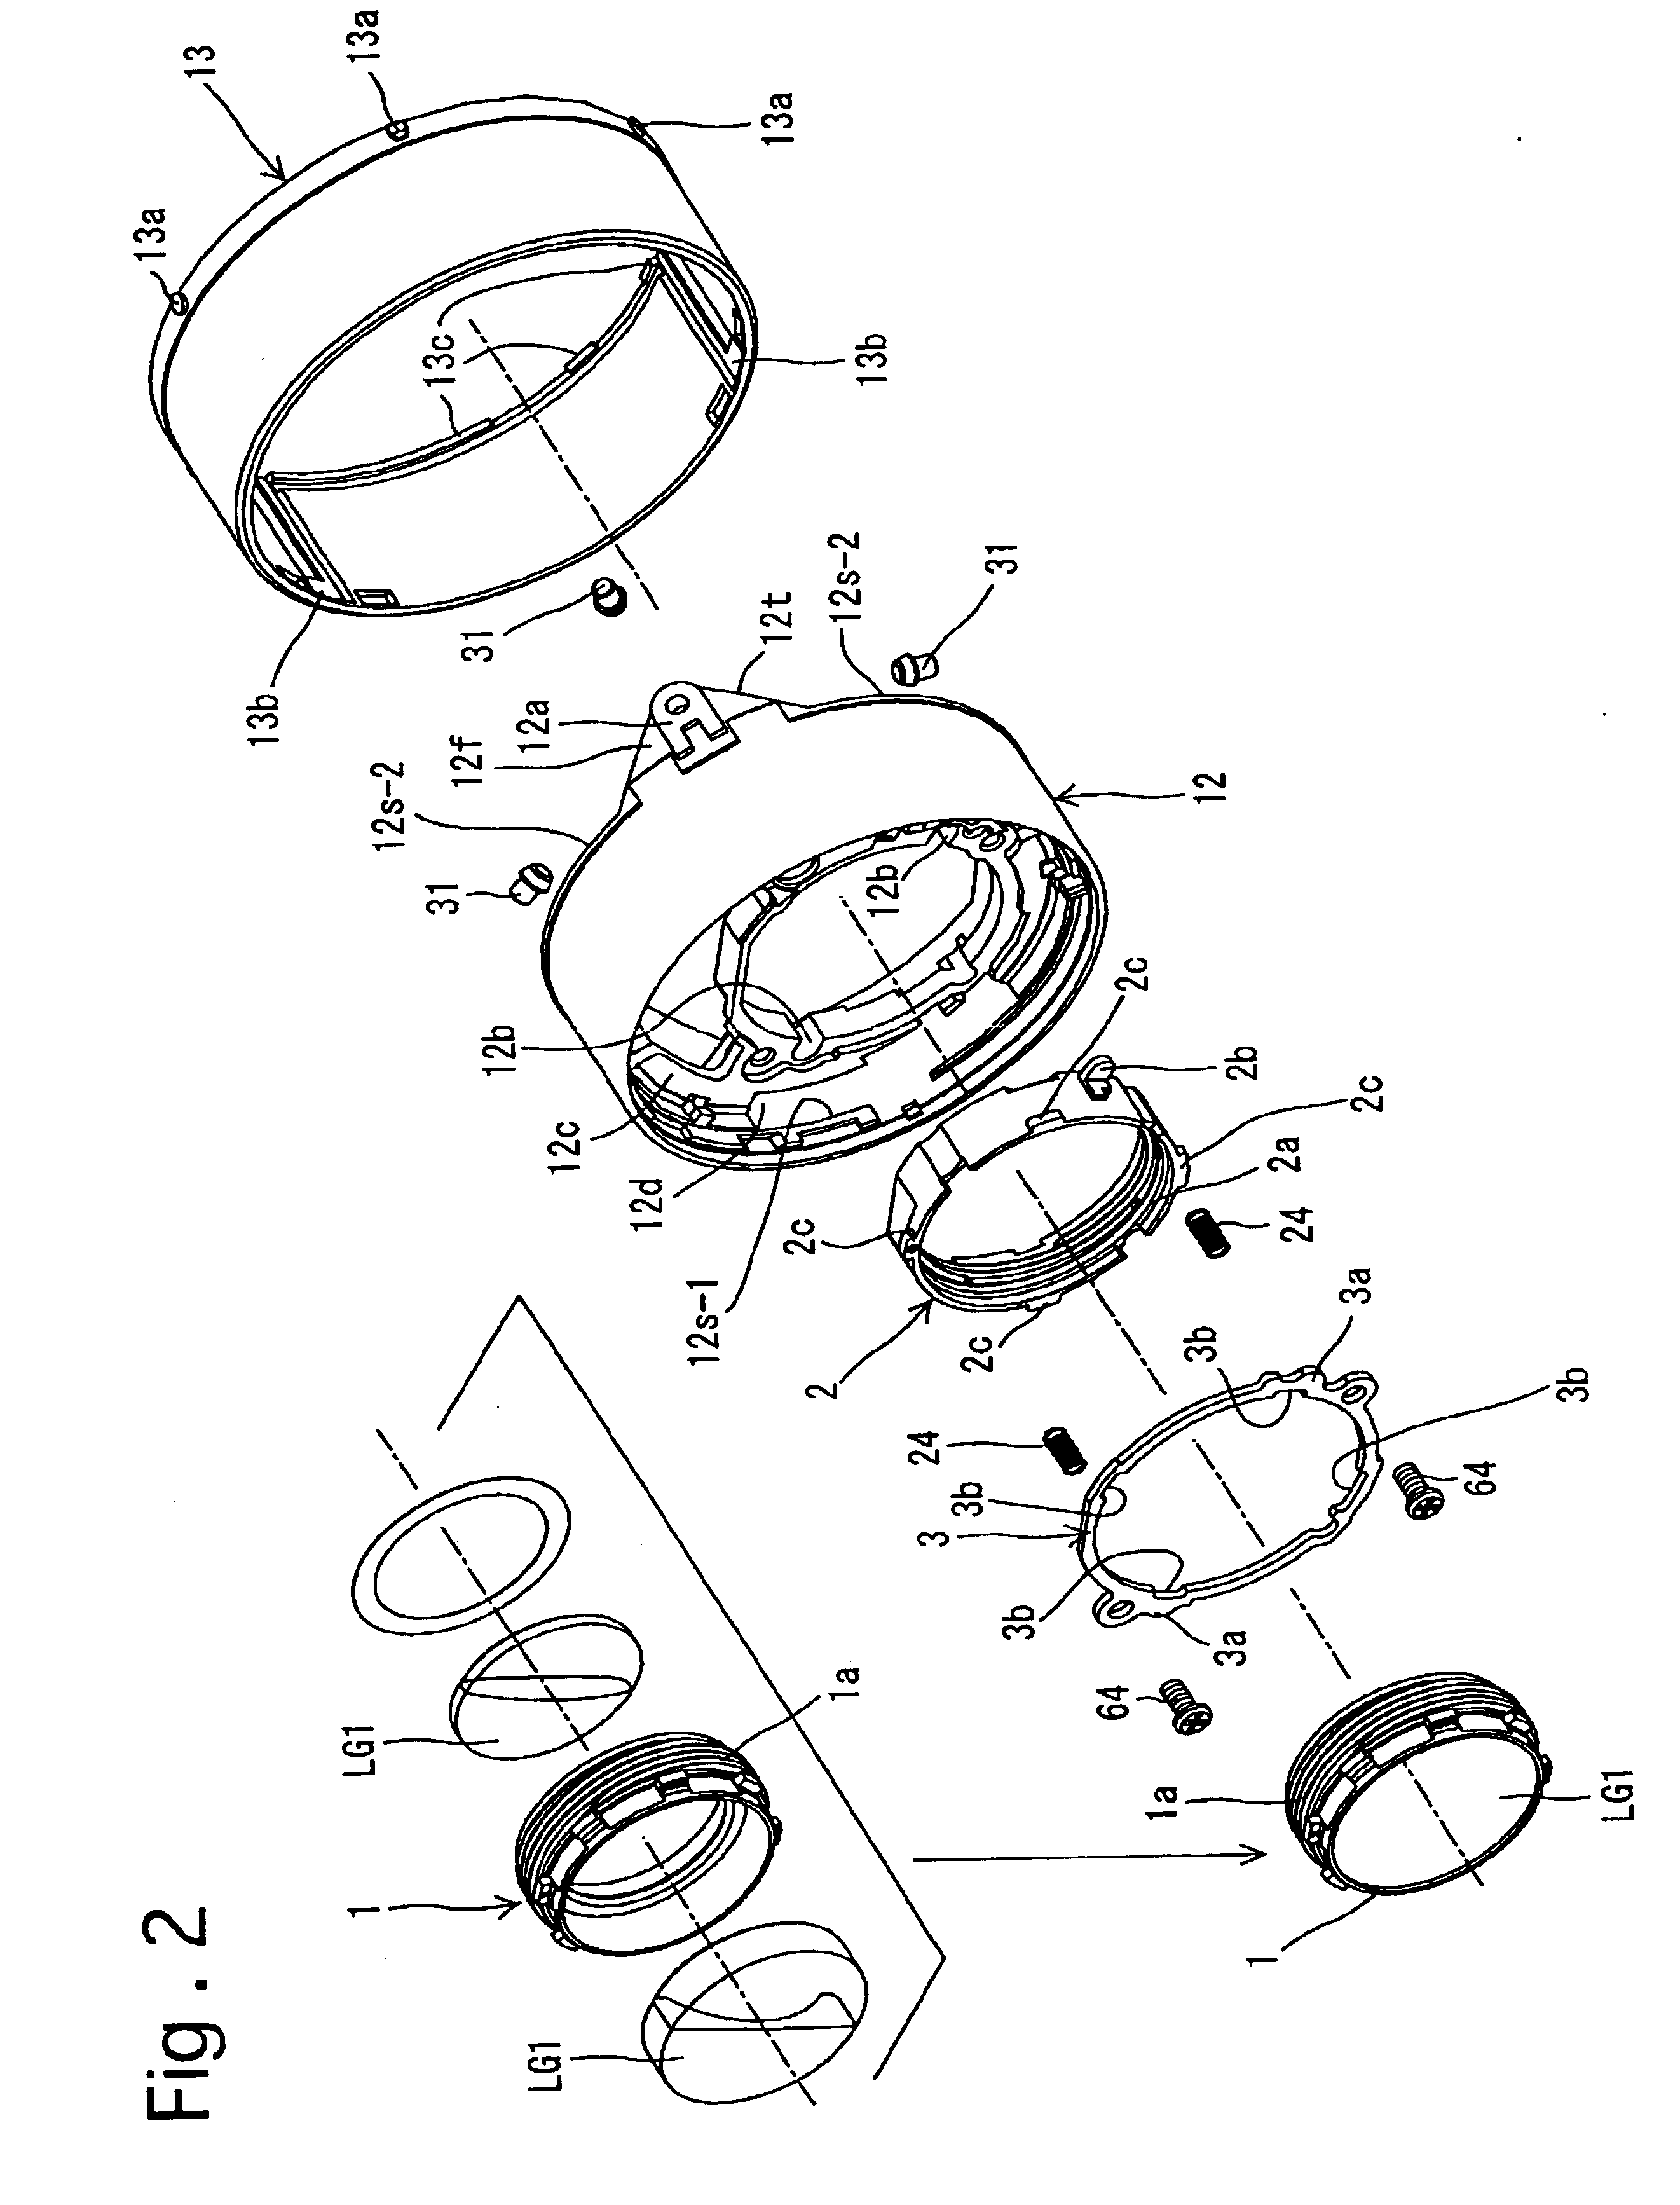 Lens barrel incorporating the rotation transfer mechanism